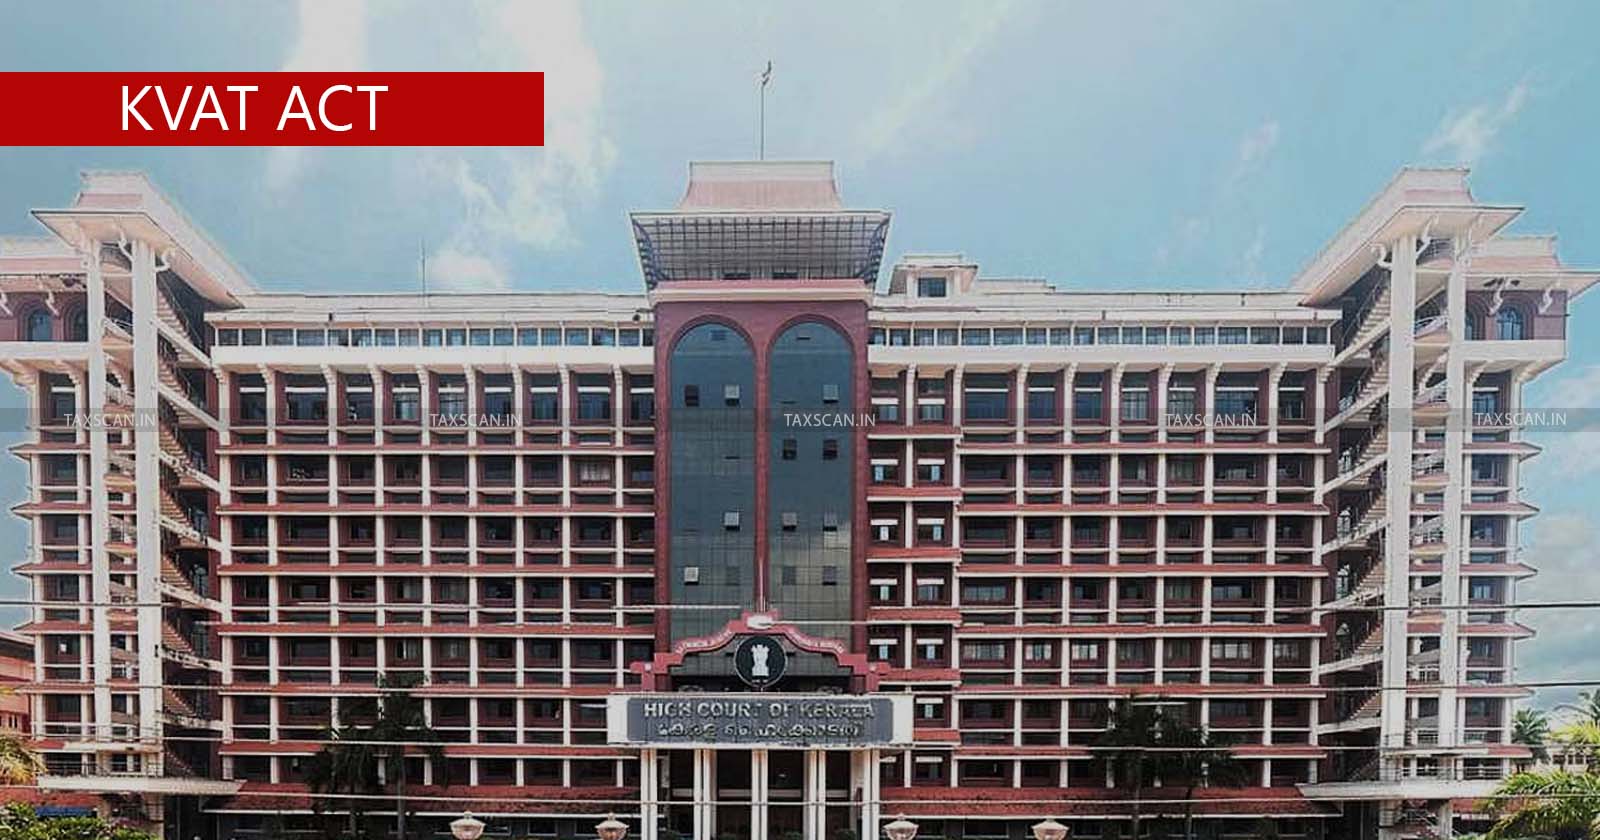 Kerala High Court - KVAT - Kerala Value Added Tax - taxscan